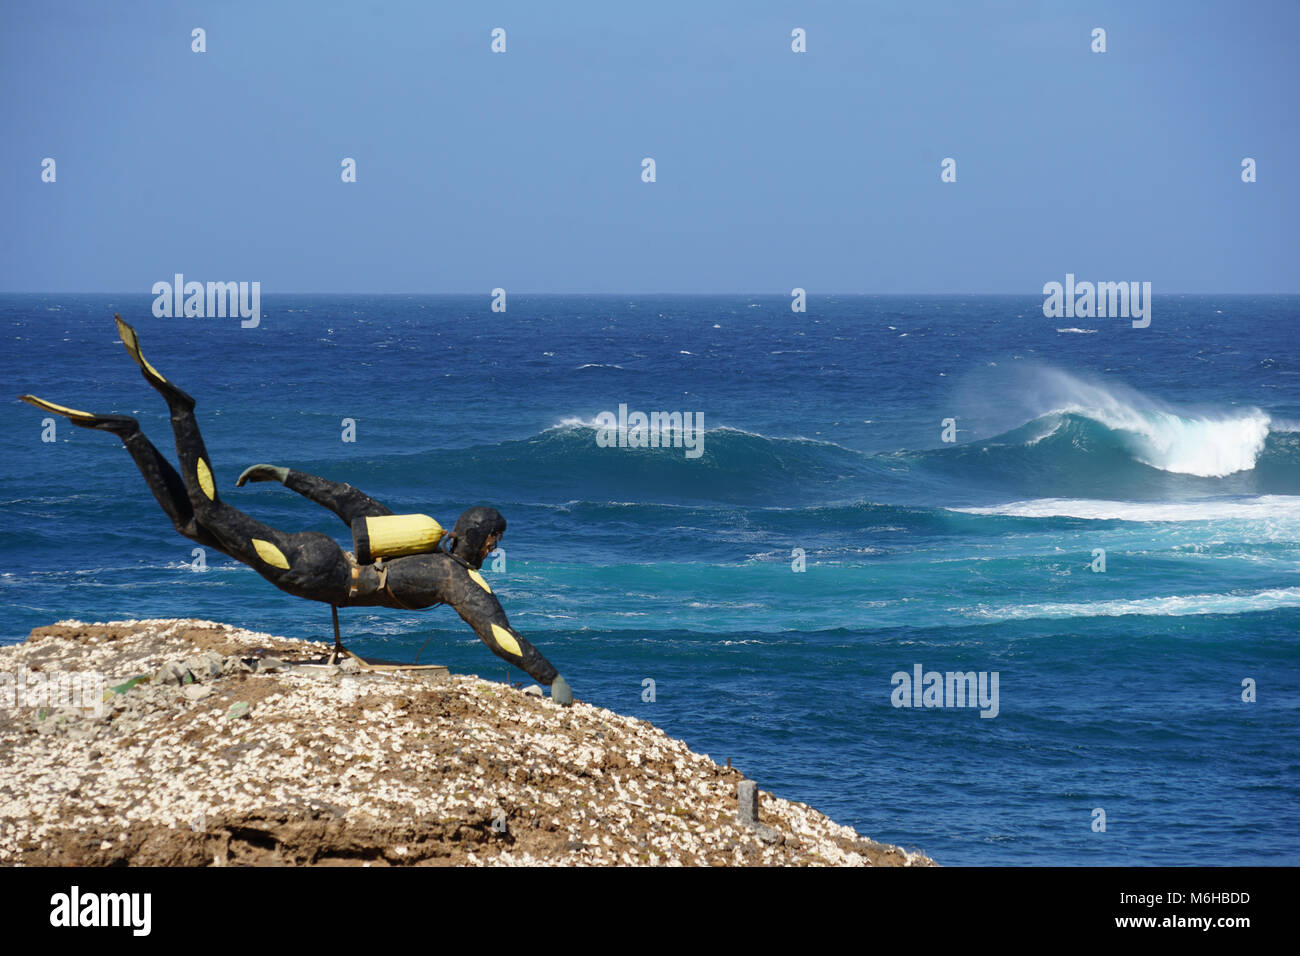 Scuba Diver Statue on a rock, facing the Sea, Ponta do Sol, Santo Antao, Cape Verde Stock Photo